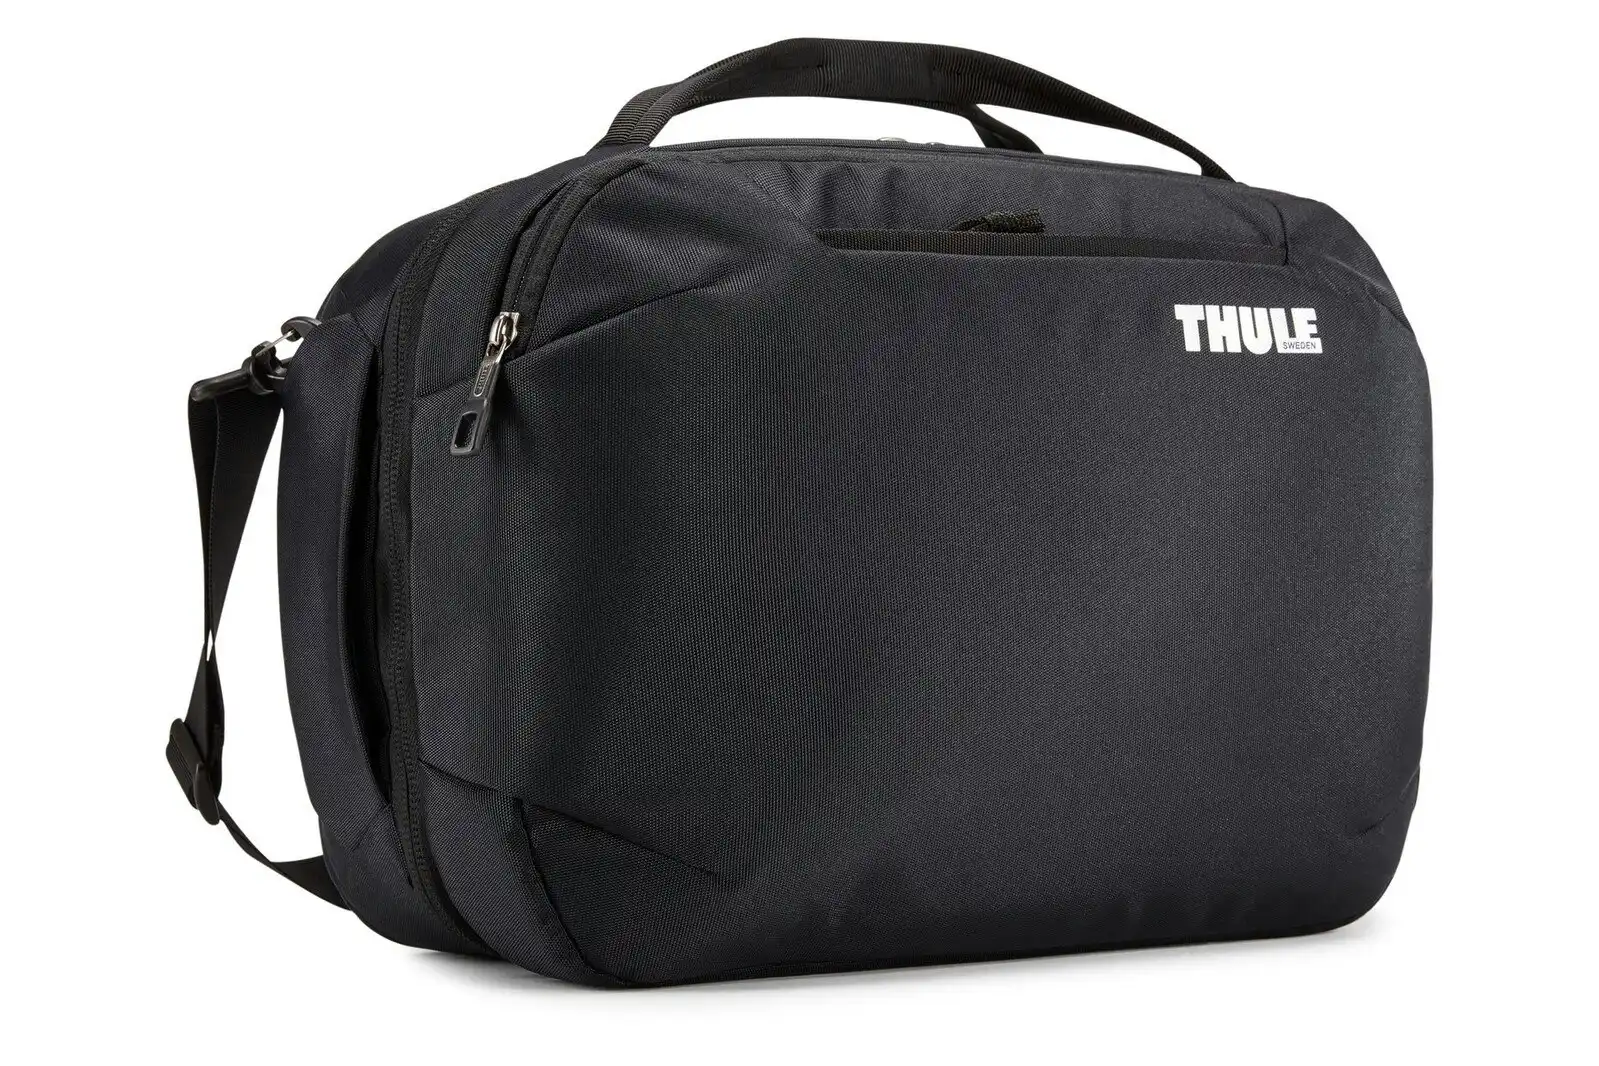 Thule Subterra 43cm/23L Carry On Boarding Travel Storage/Shoulder Nylon Bag BLK